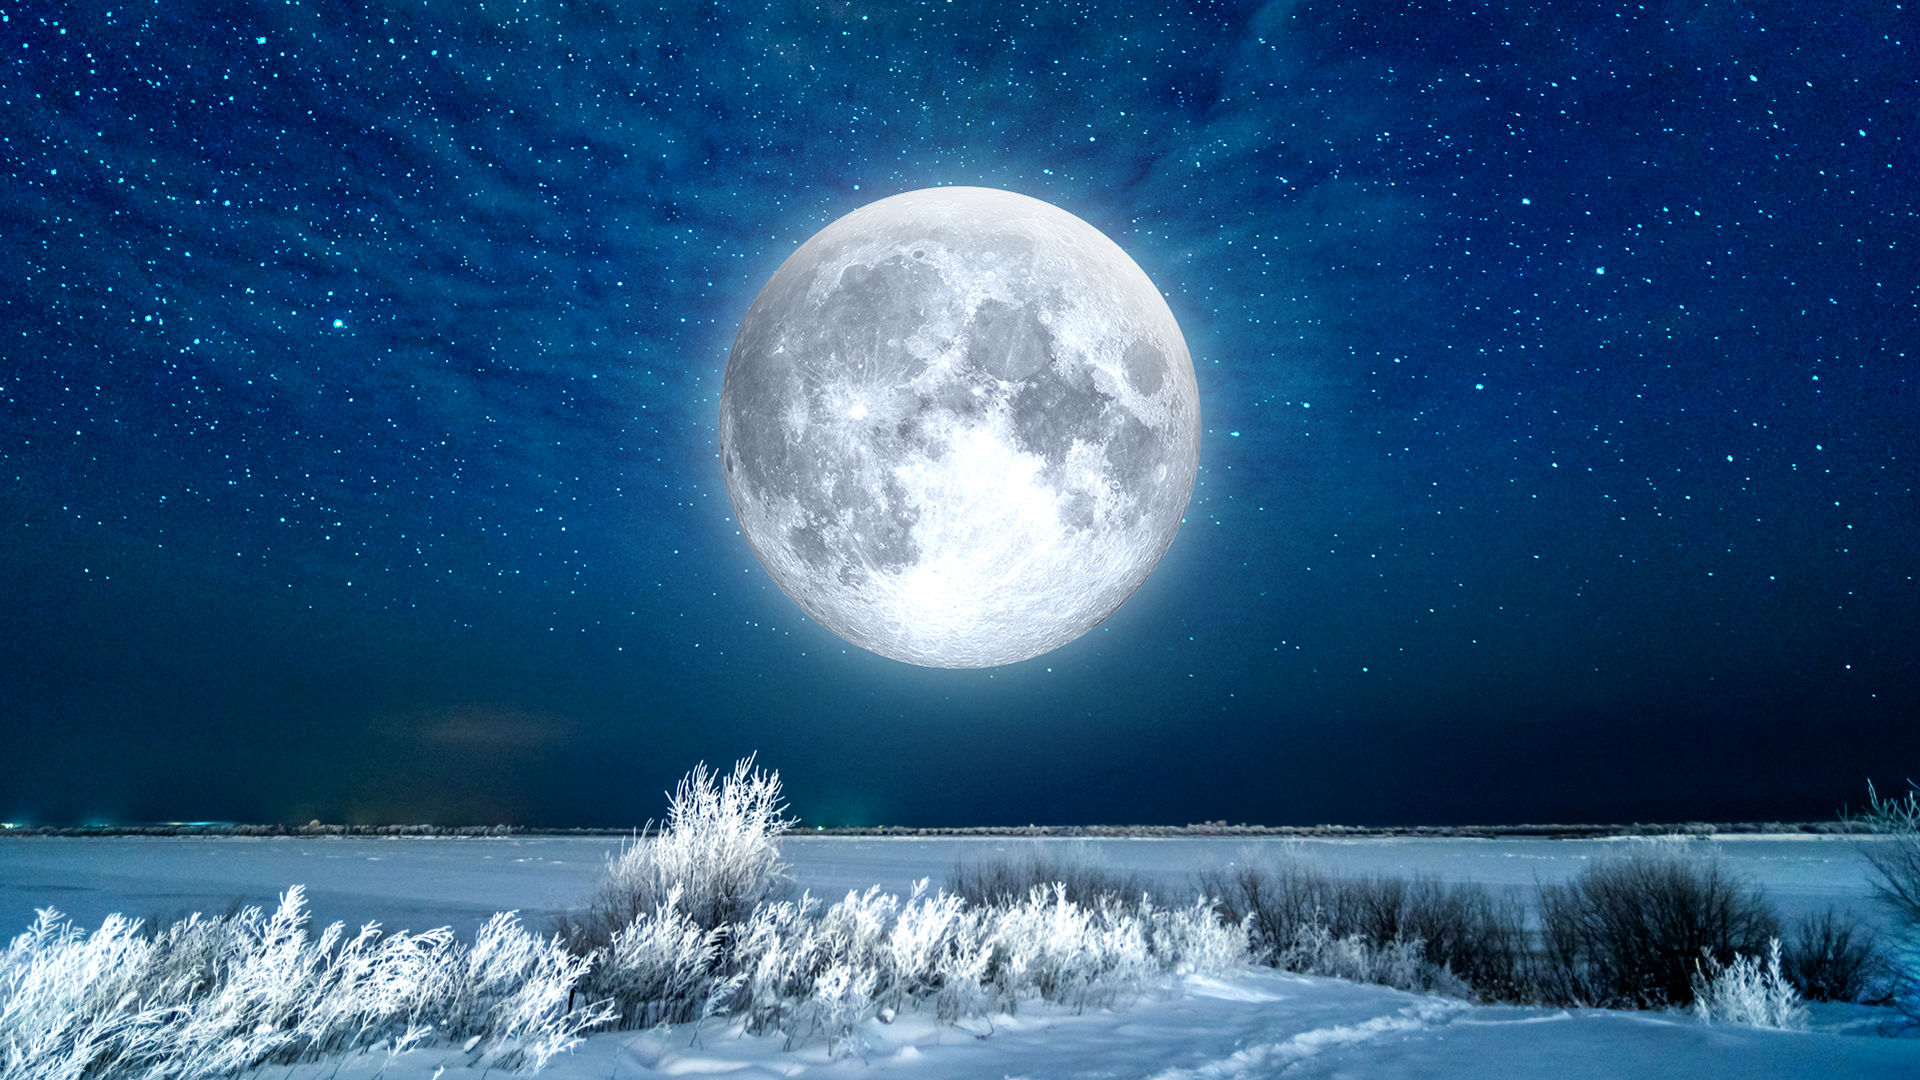 Full Snow Moon 2020: Is It a Supermoon?